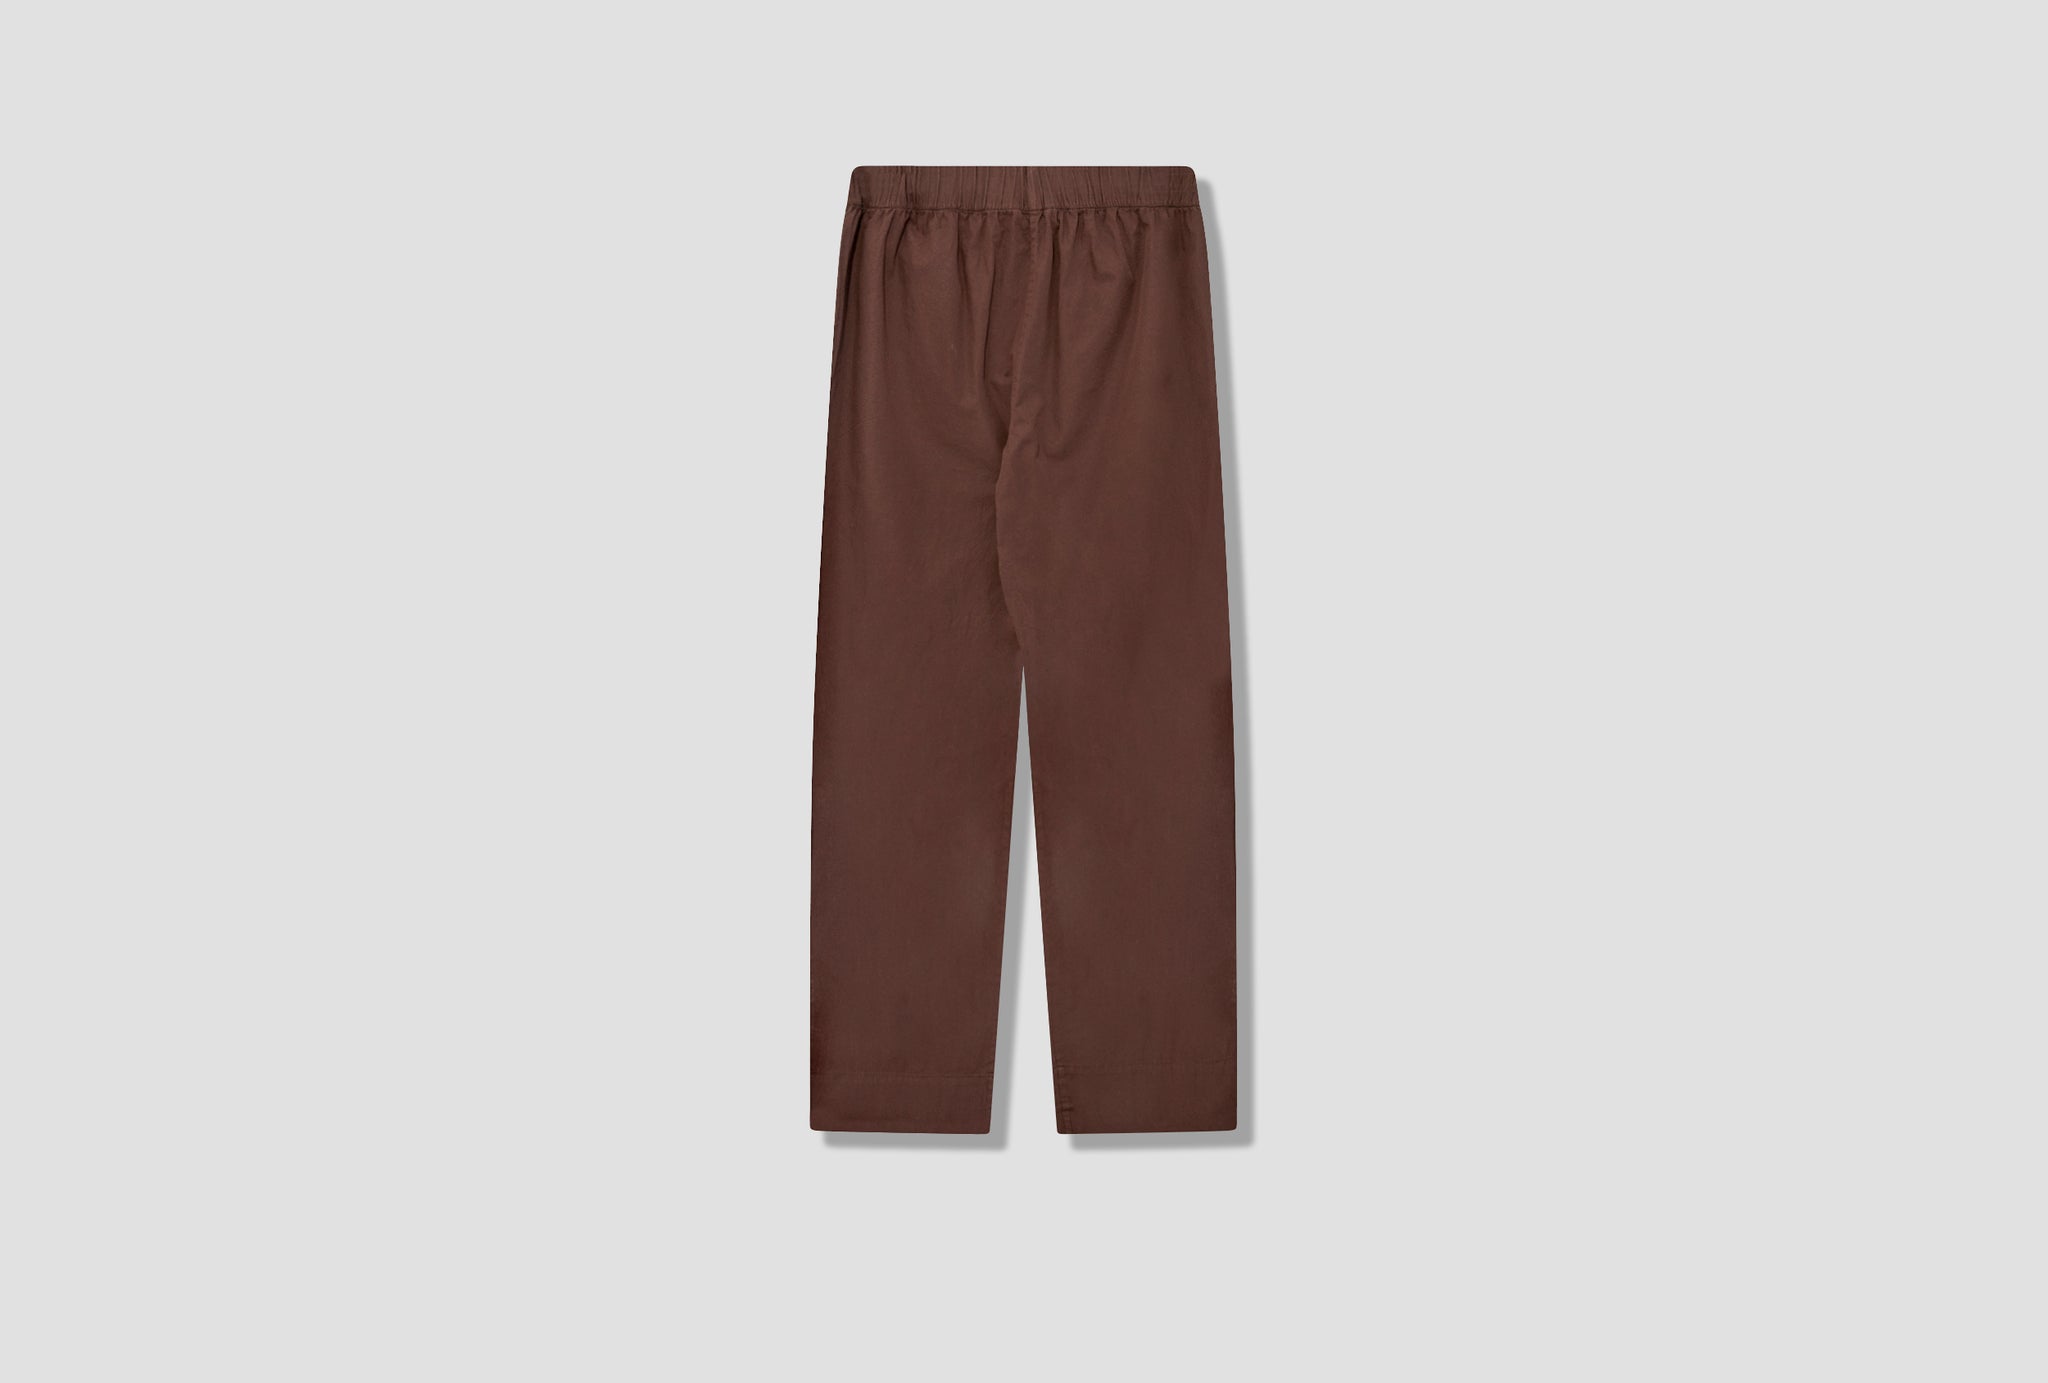 UNISEX SLEEPWEAR PANTS – POPLIN Dark brown